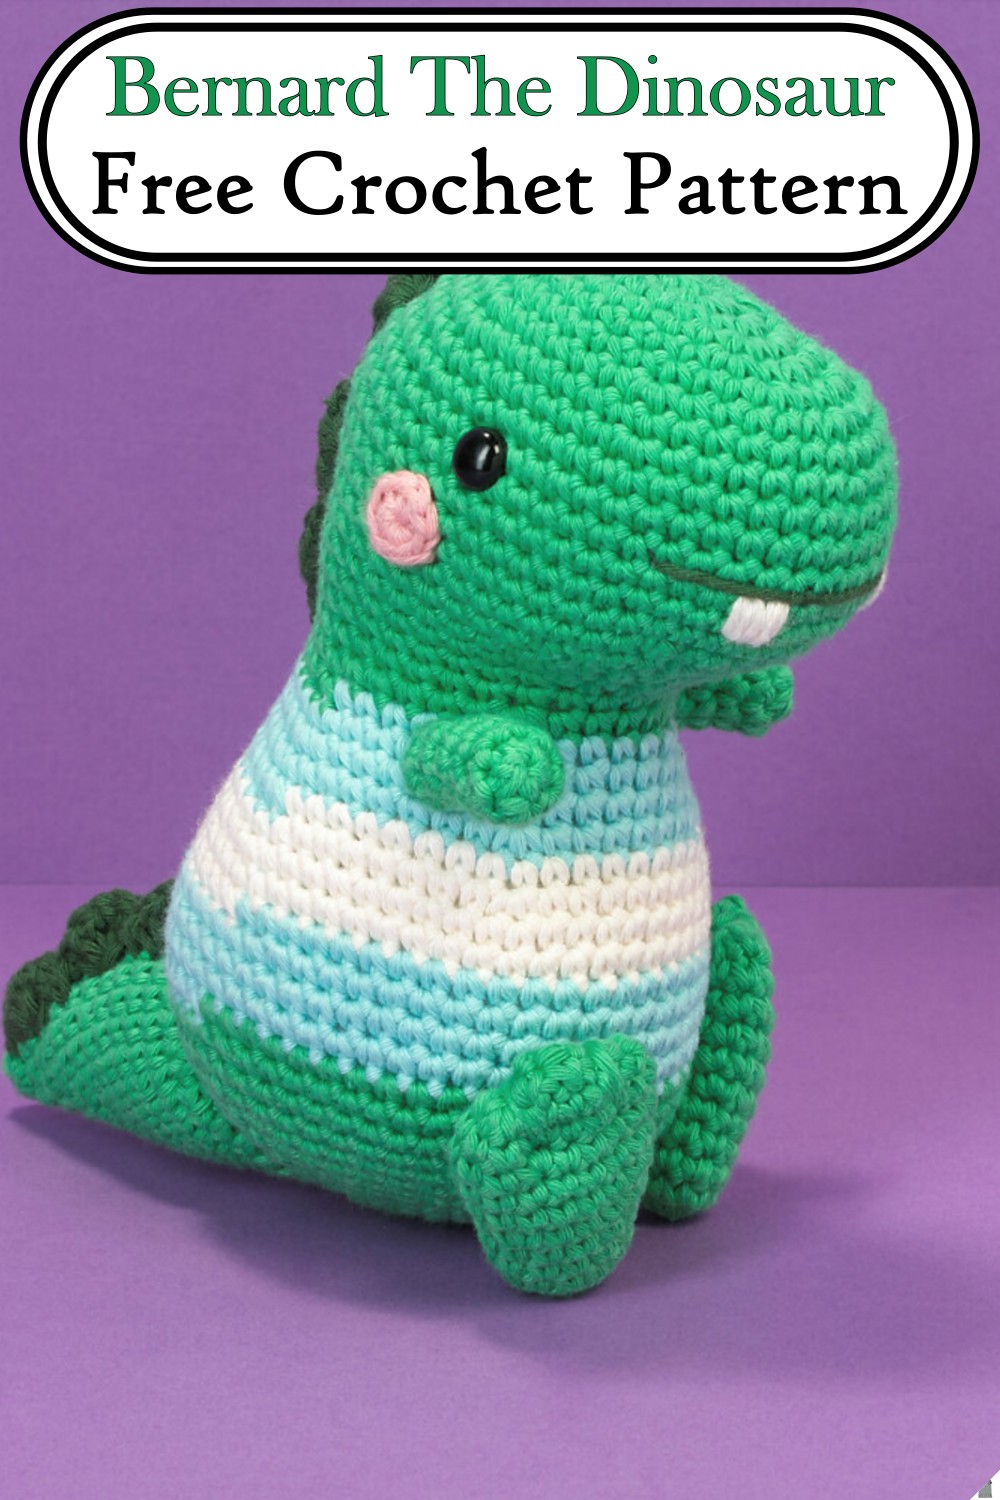 How To Make A Crochet Dinosaur